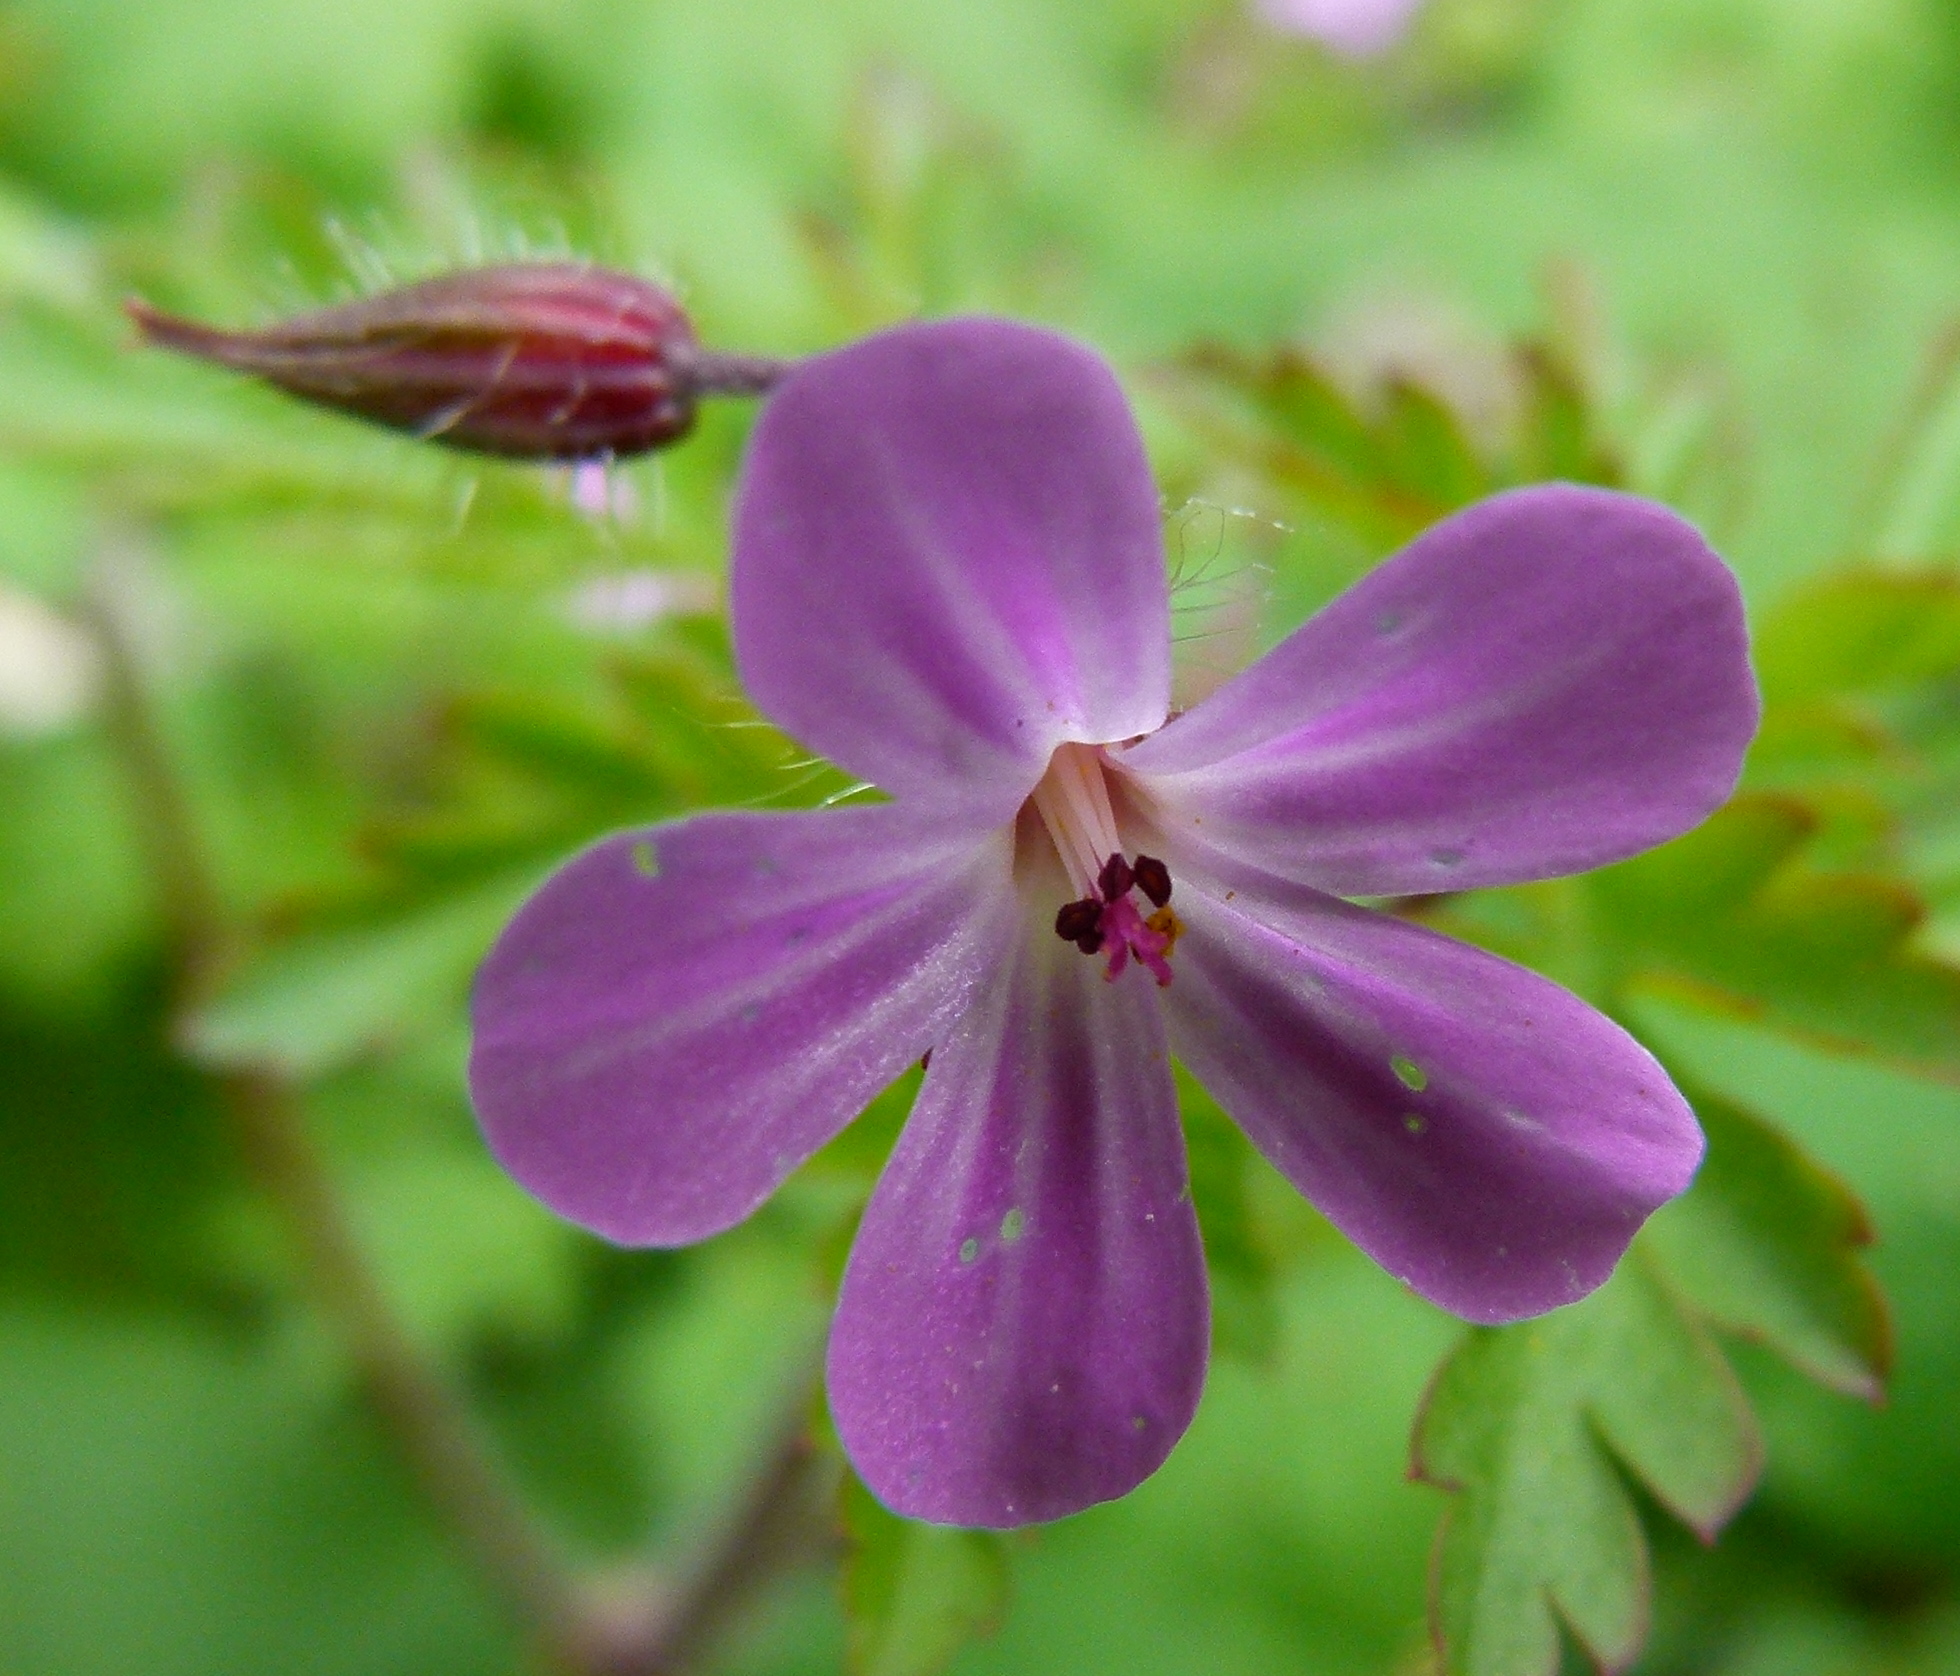 File:Petite fleur violette.JPG - Wikimedia Commons